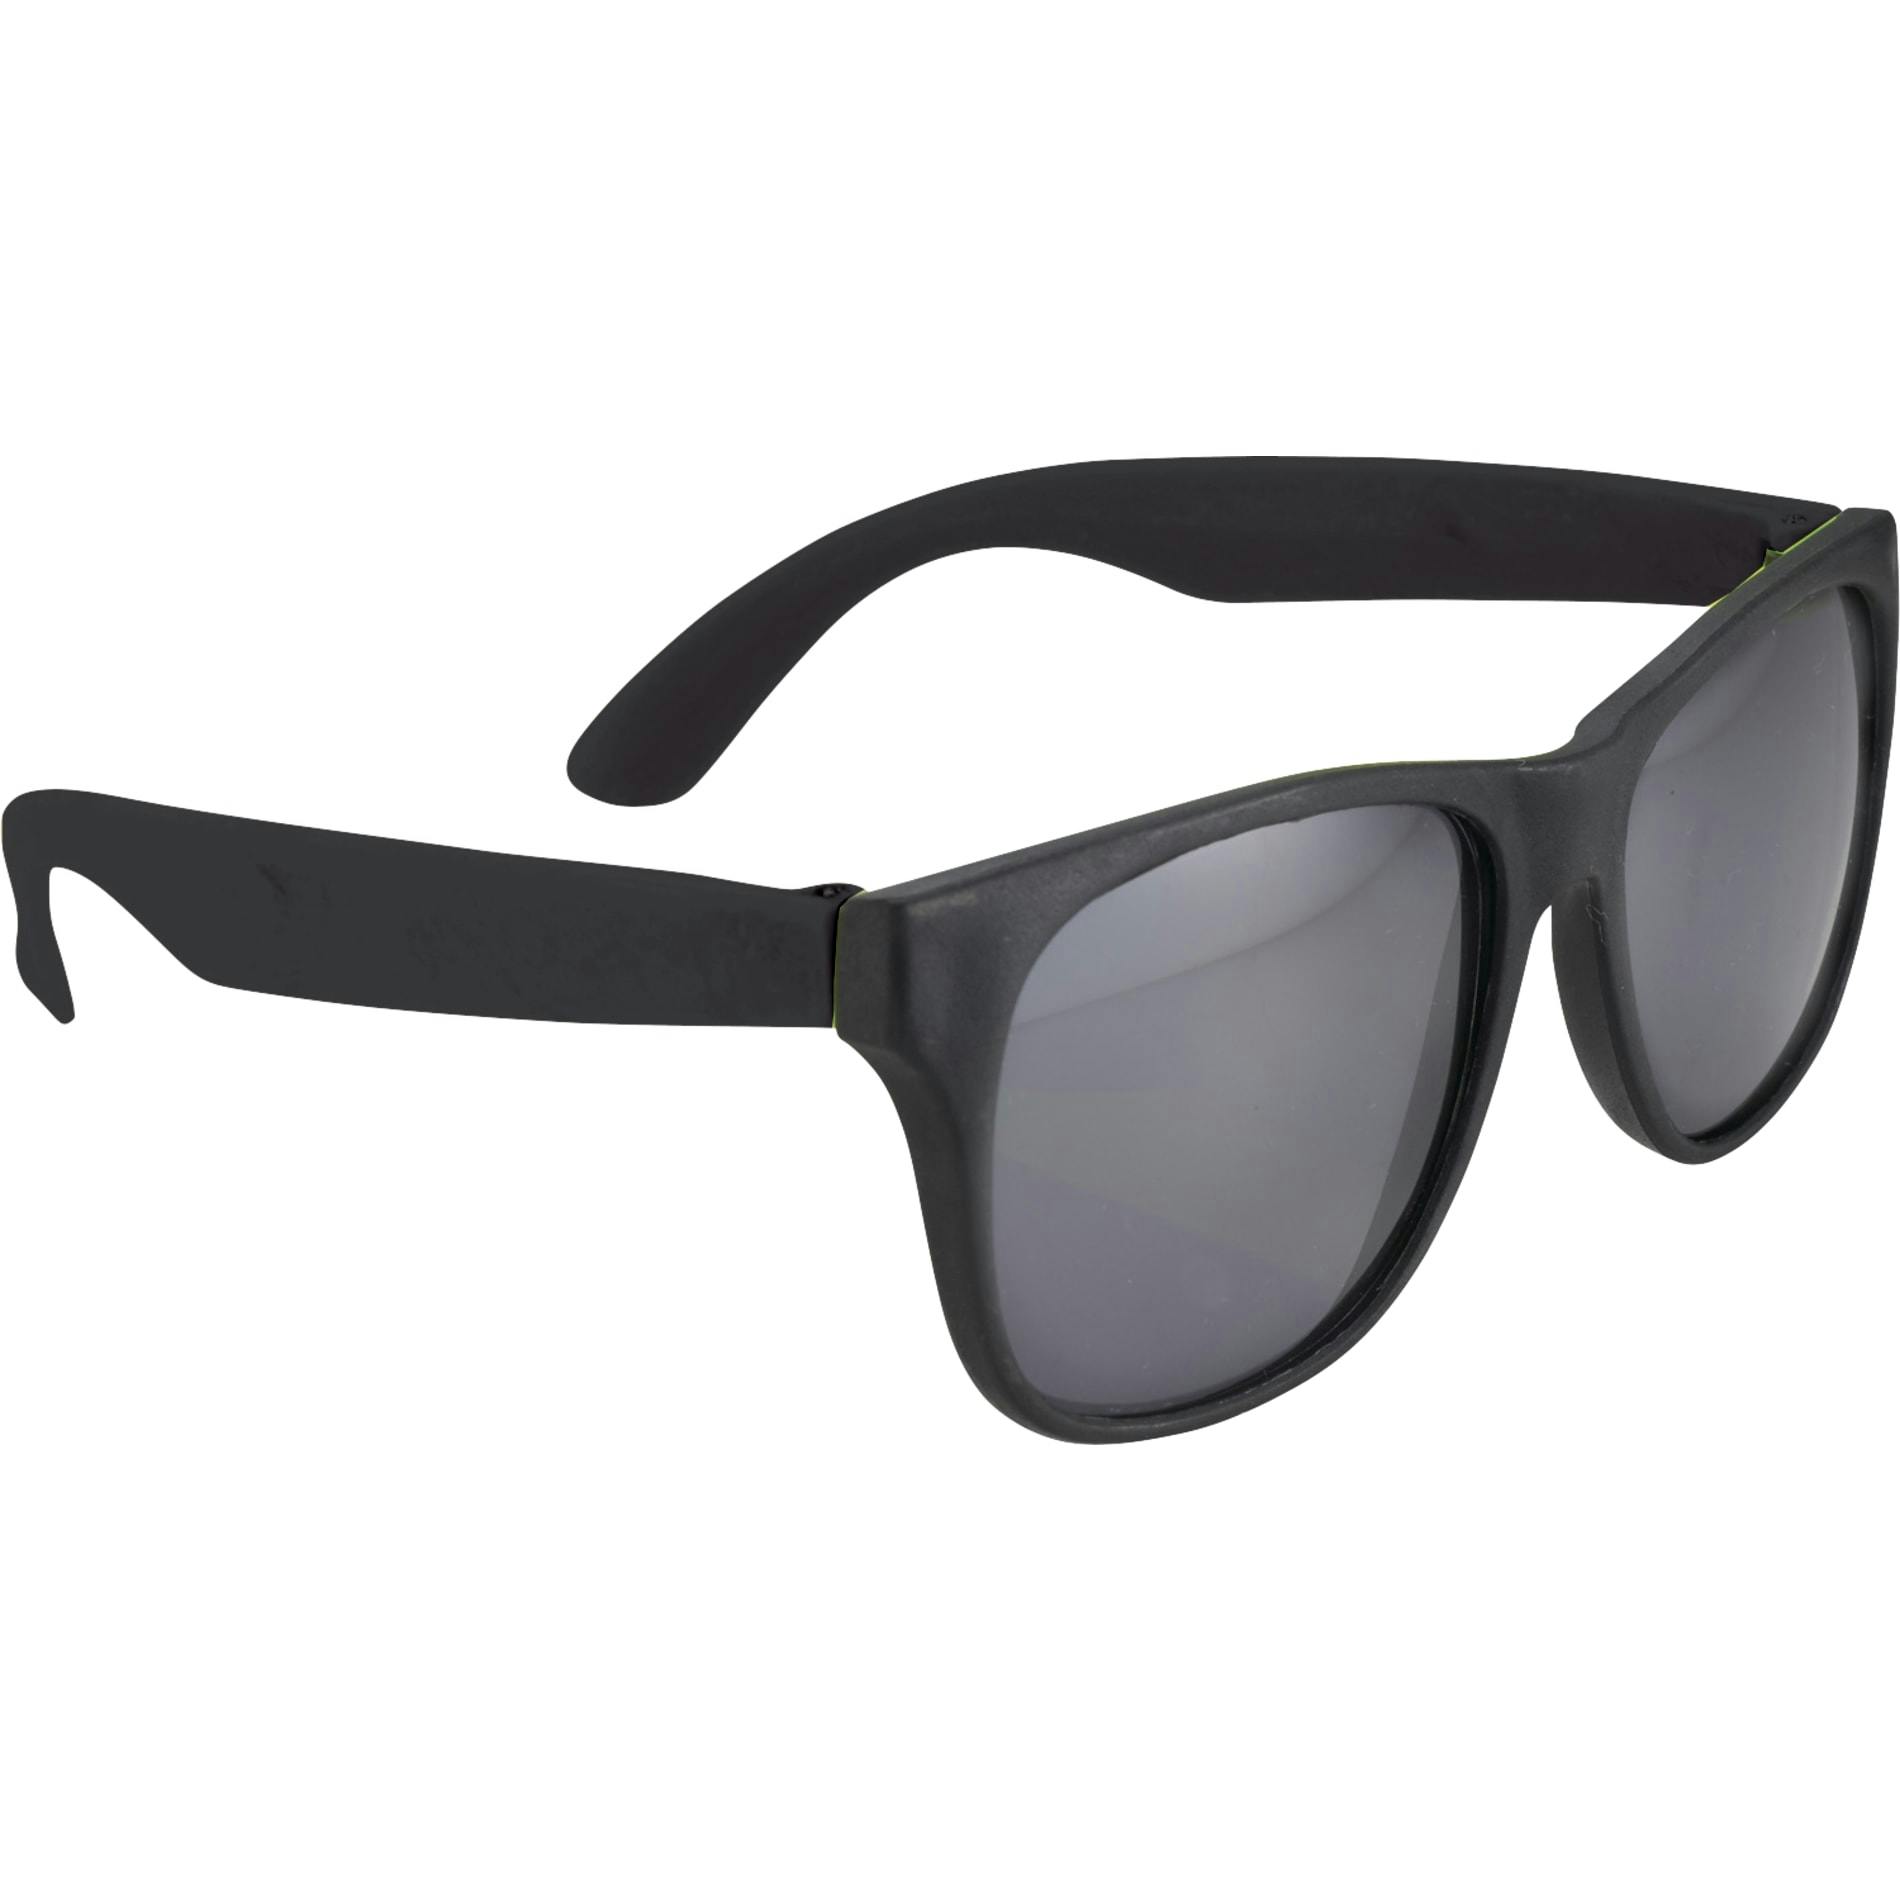 Retro Sunglasses - additional Image 2